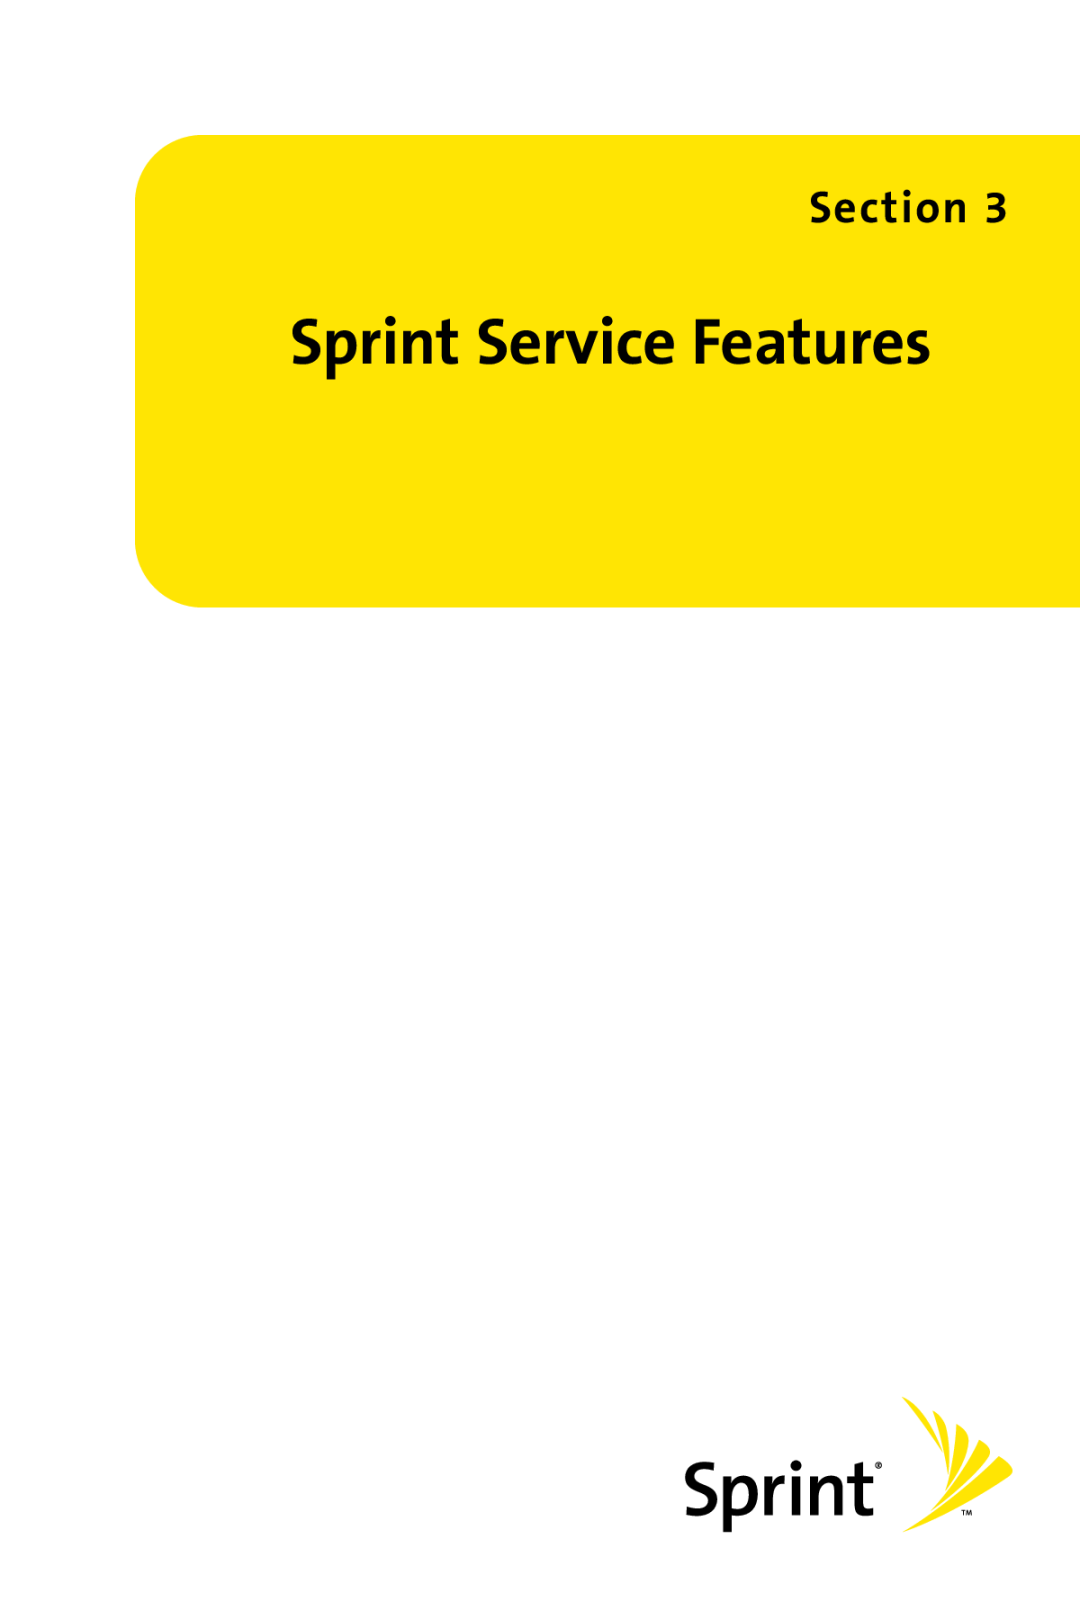 Sprint Nextel LX160 manual Sprint Service Features, Section 